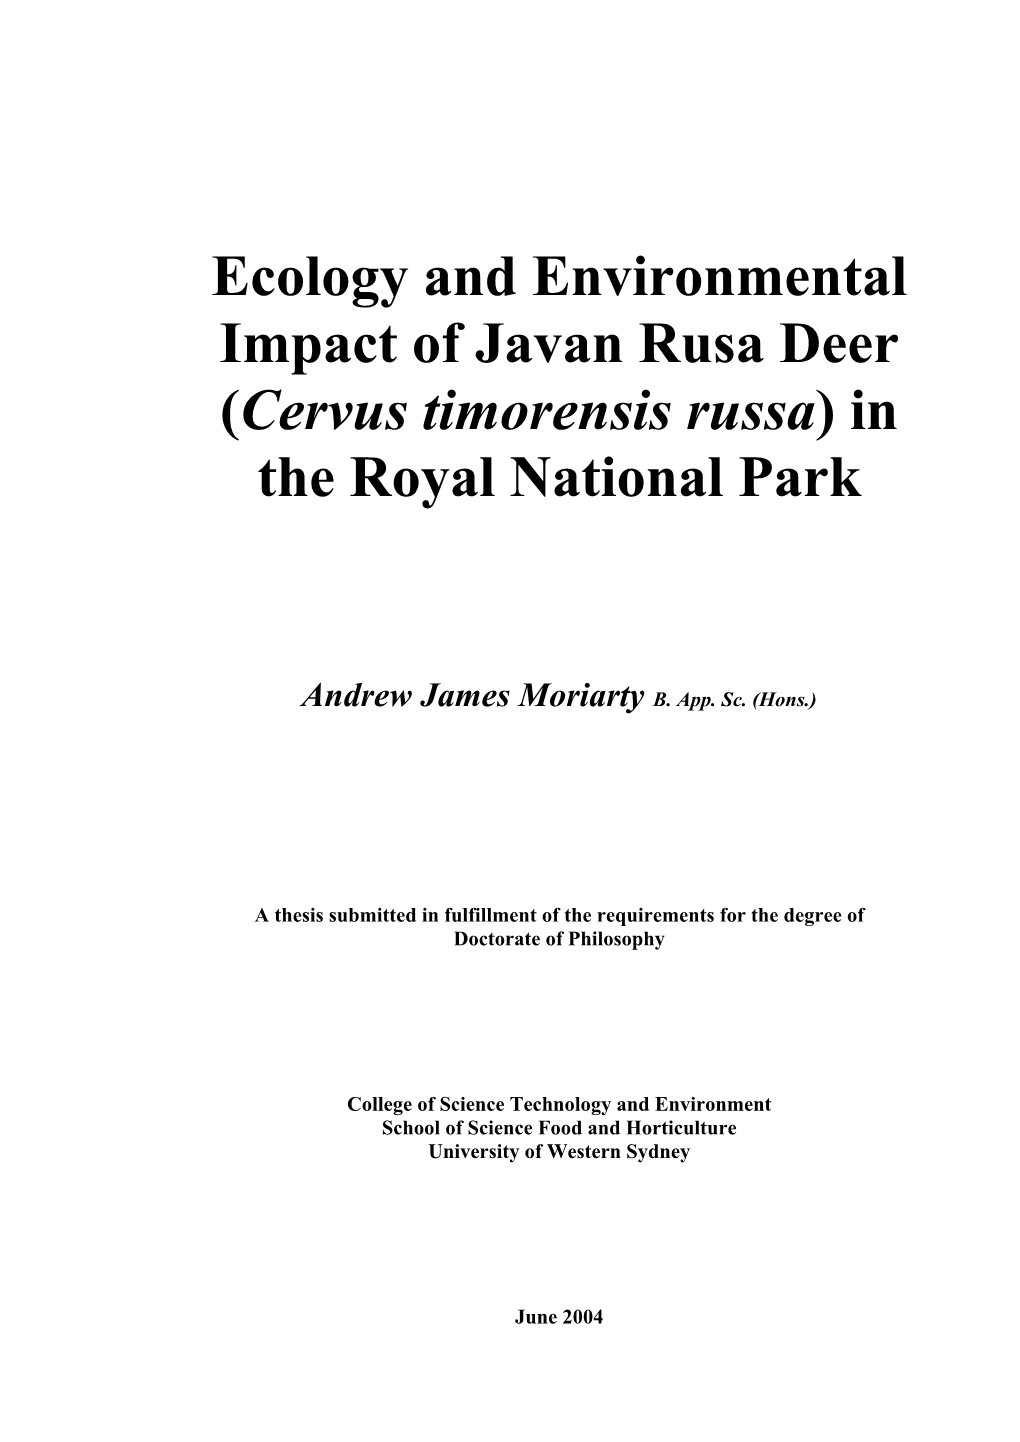 Ecology and Environmental Impact of Javan Rusa Deer (Cervus Timorensis Russa) in the Royal National Park